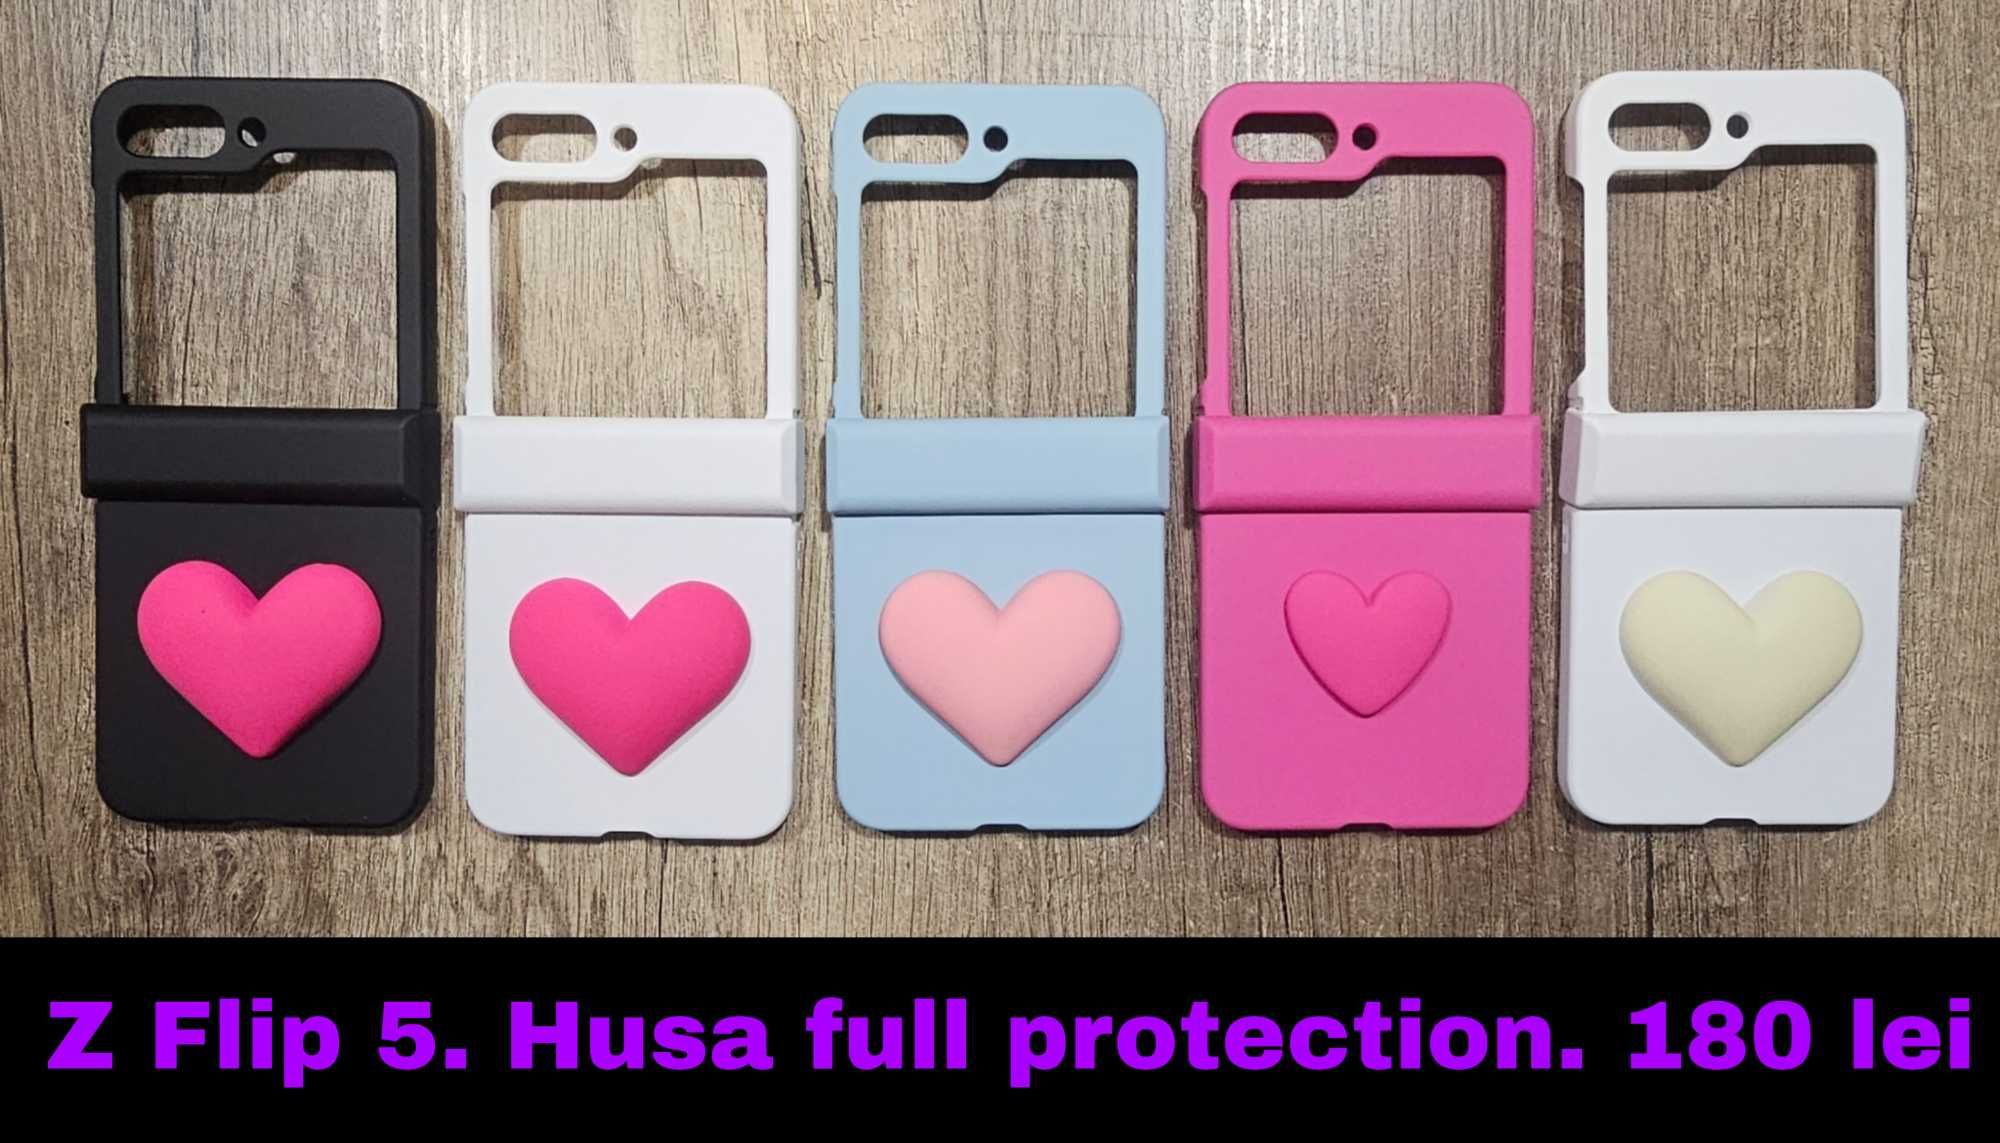 Z Flip 5 - husa full protection